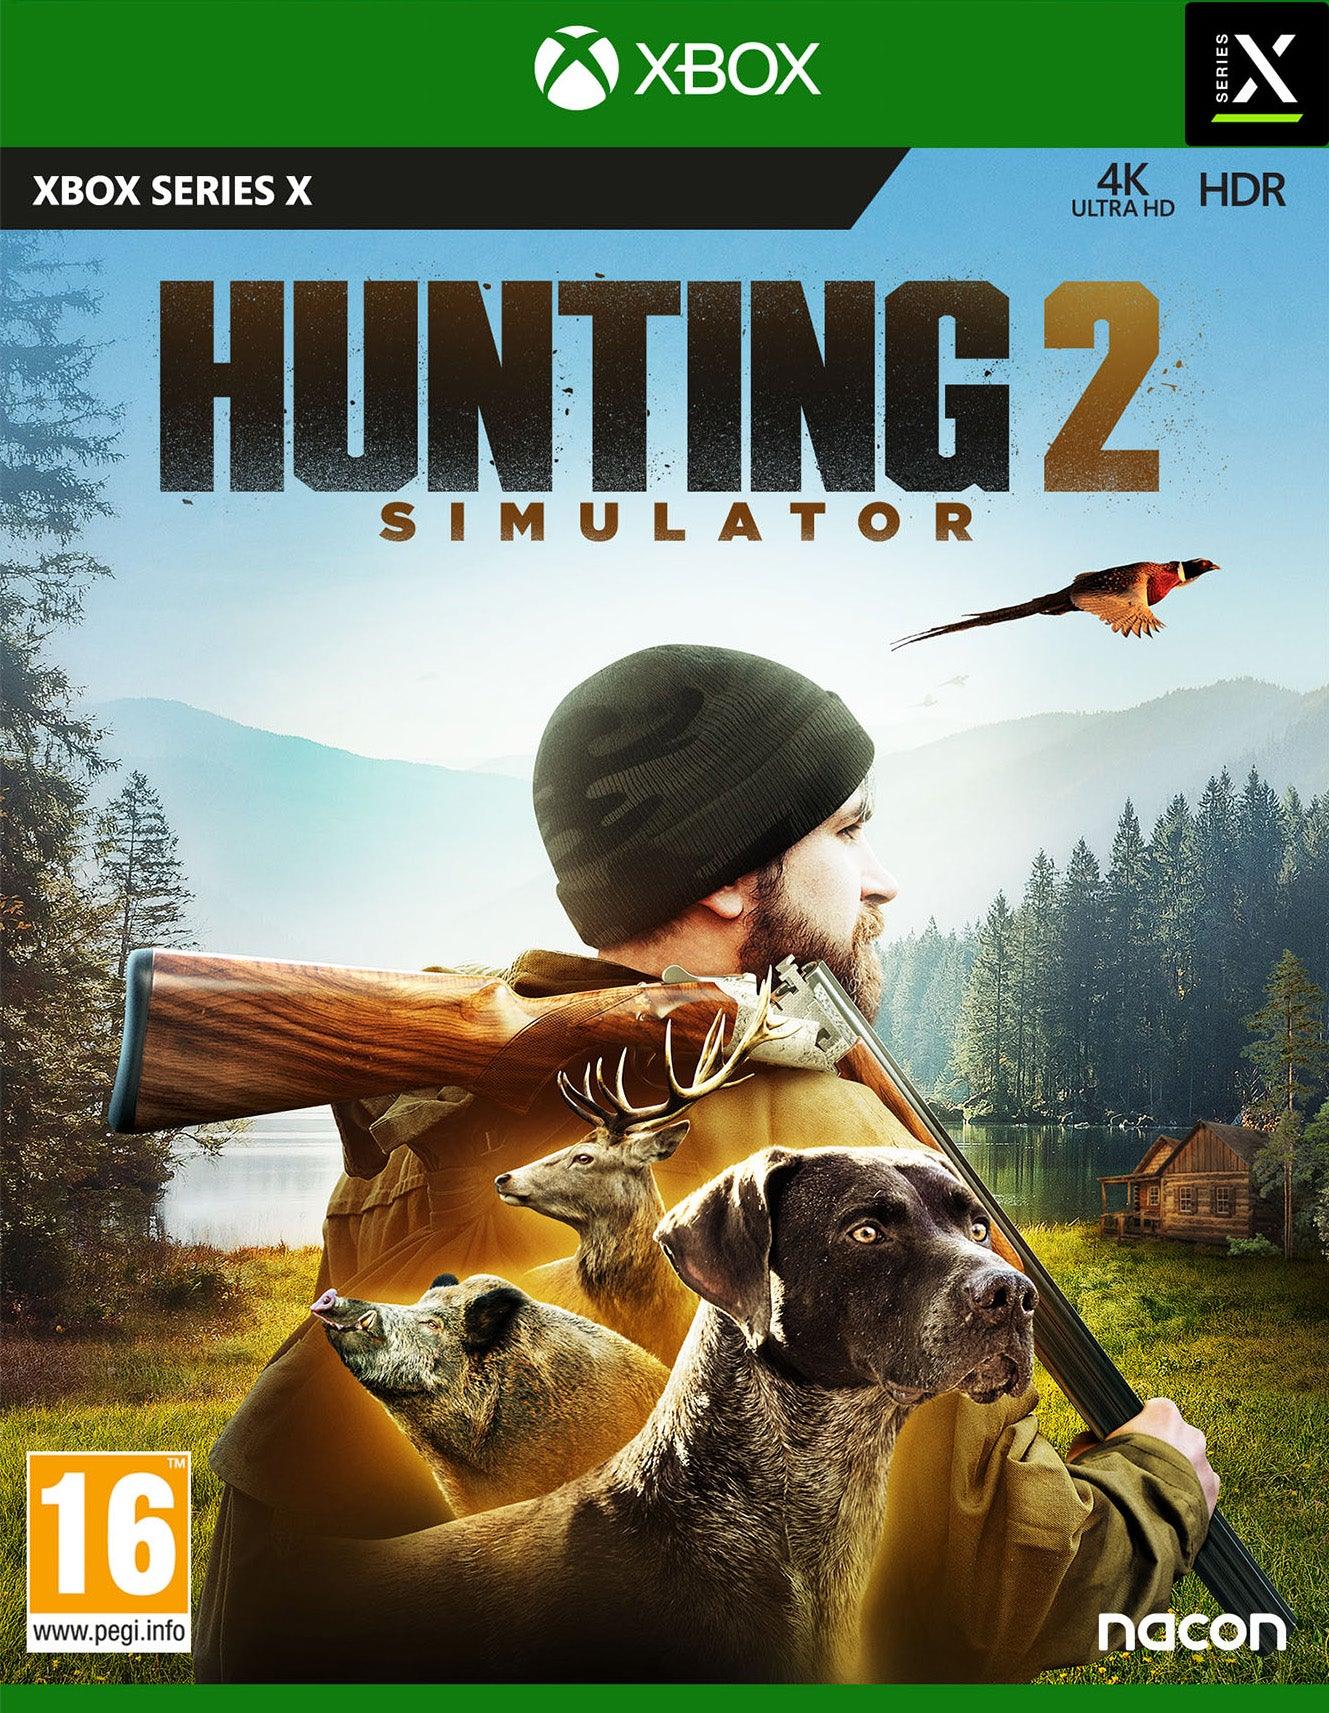 Hunting Simulator 2 - Want a New Gadget